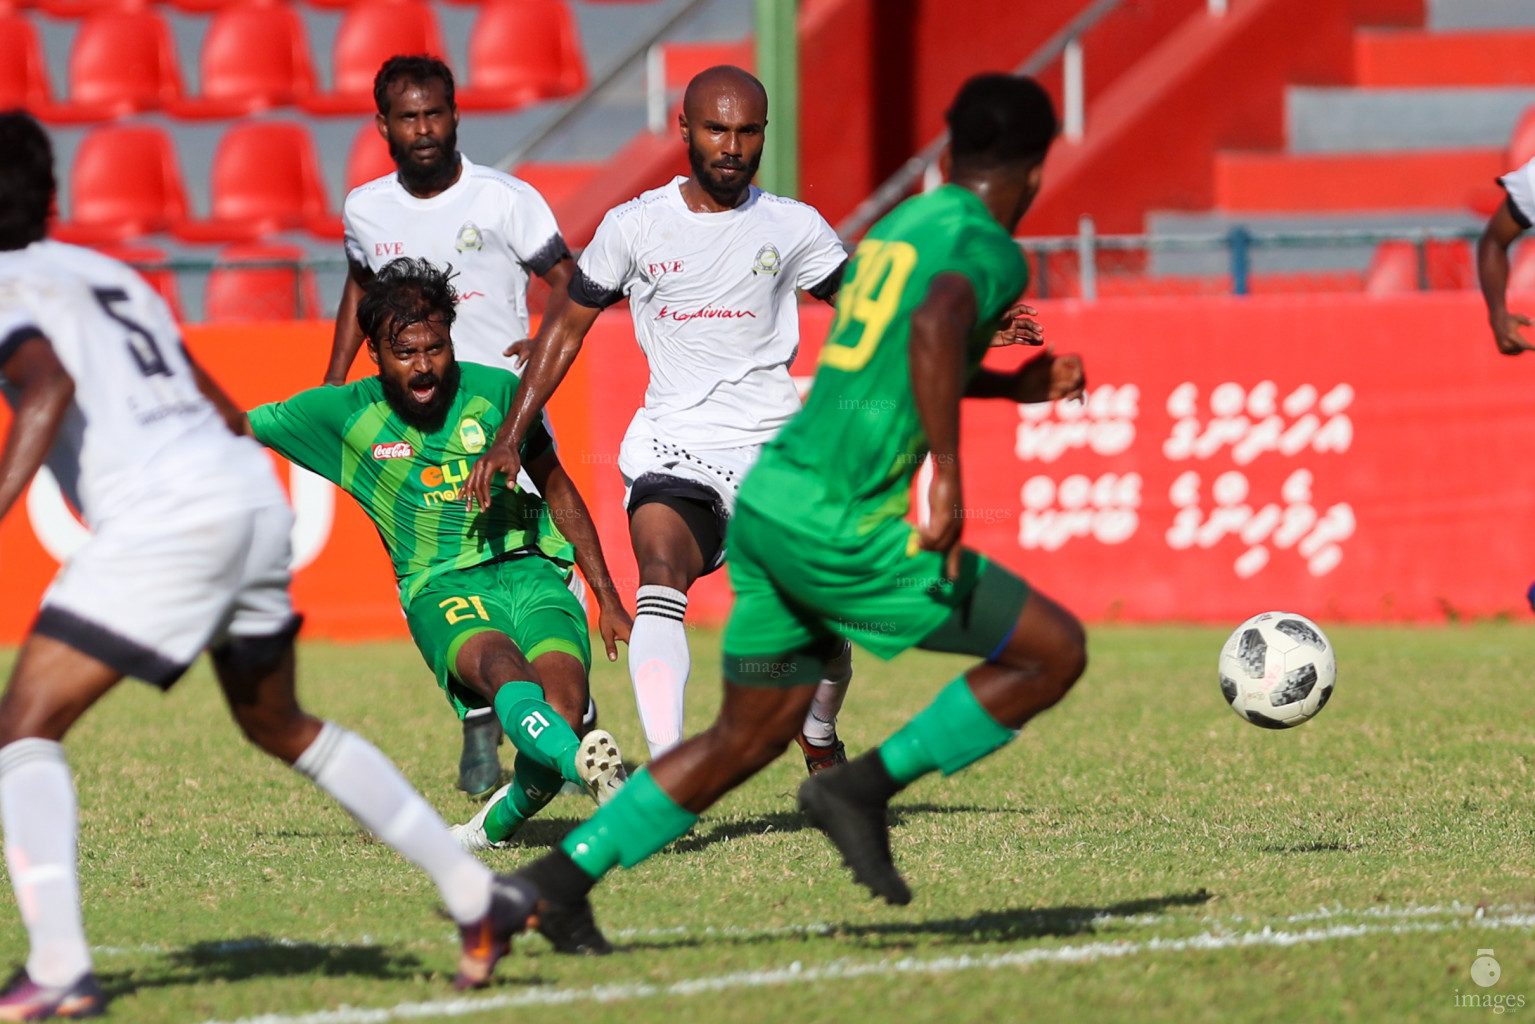 Maziya SRC vs Green Streets in Dhiraagu Dhivehi Premier League 2018 in Male, Maldives, Sunday October 21, 2018. (Images.mv Photo/Suadh Abdul Sattar)